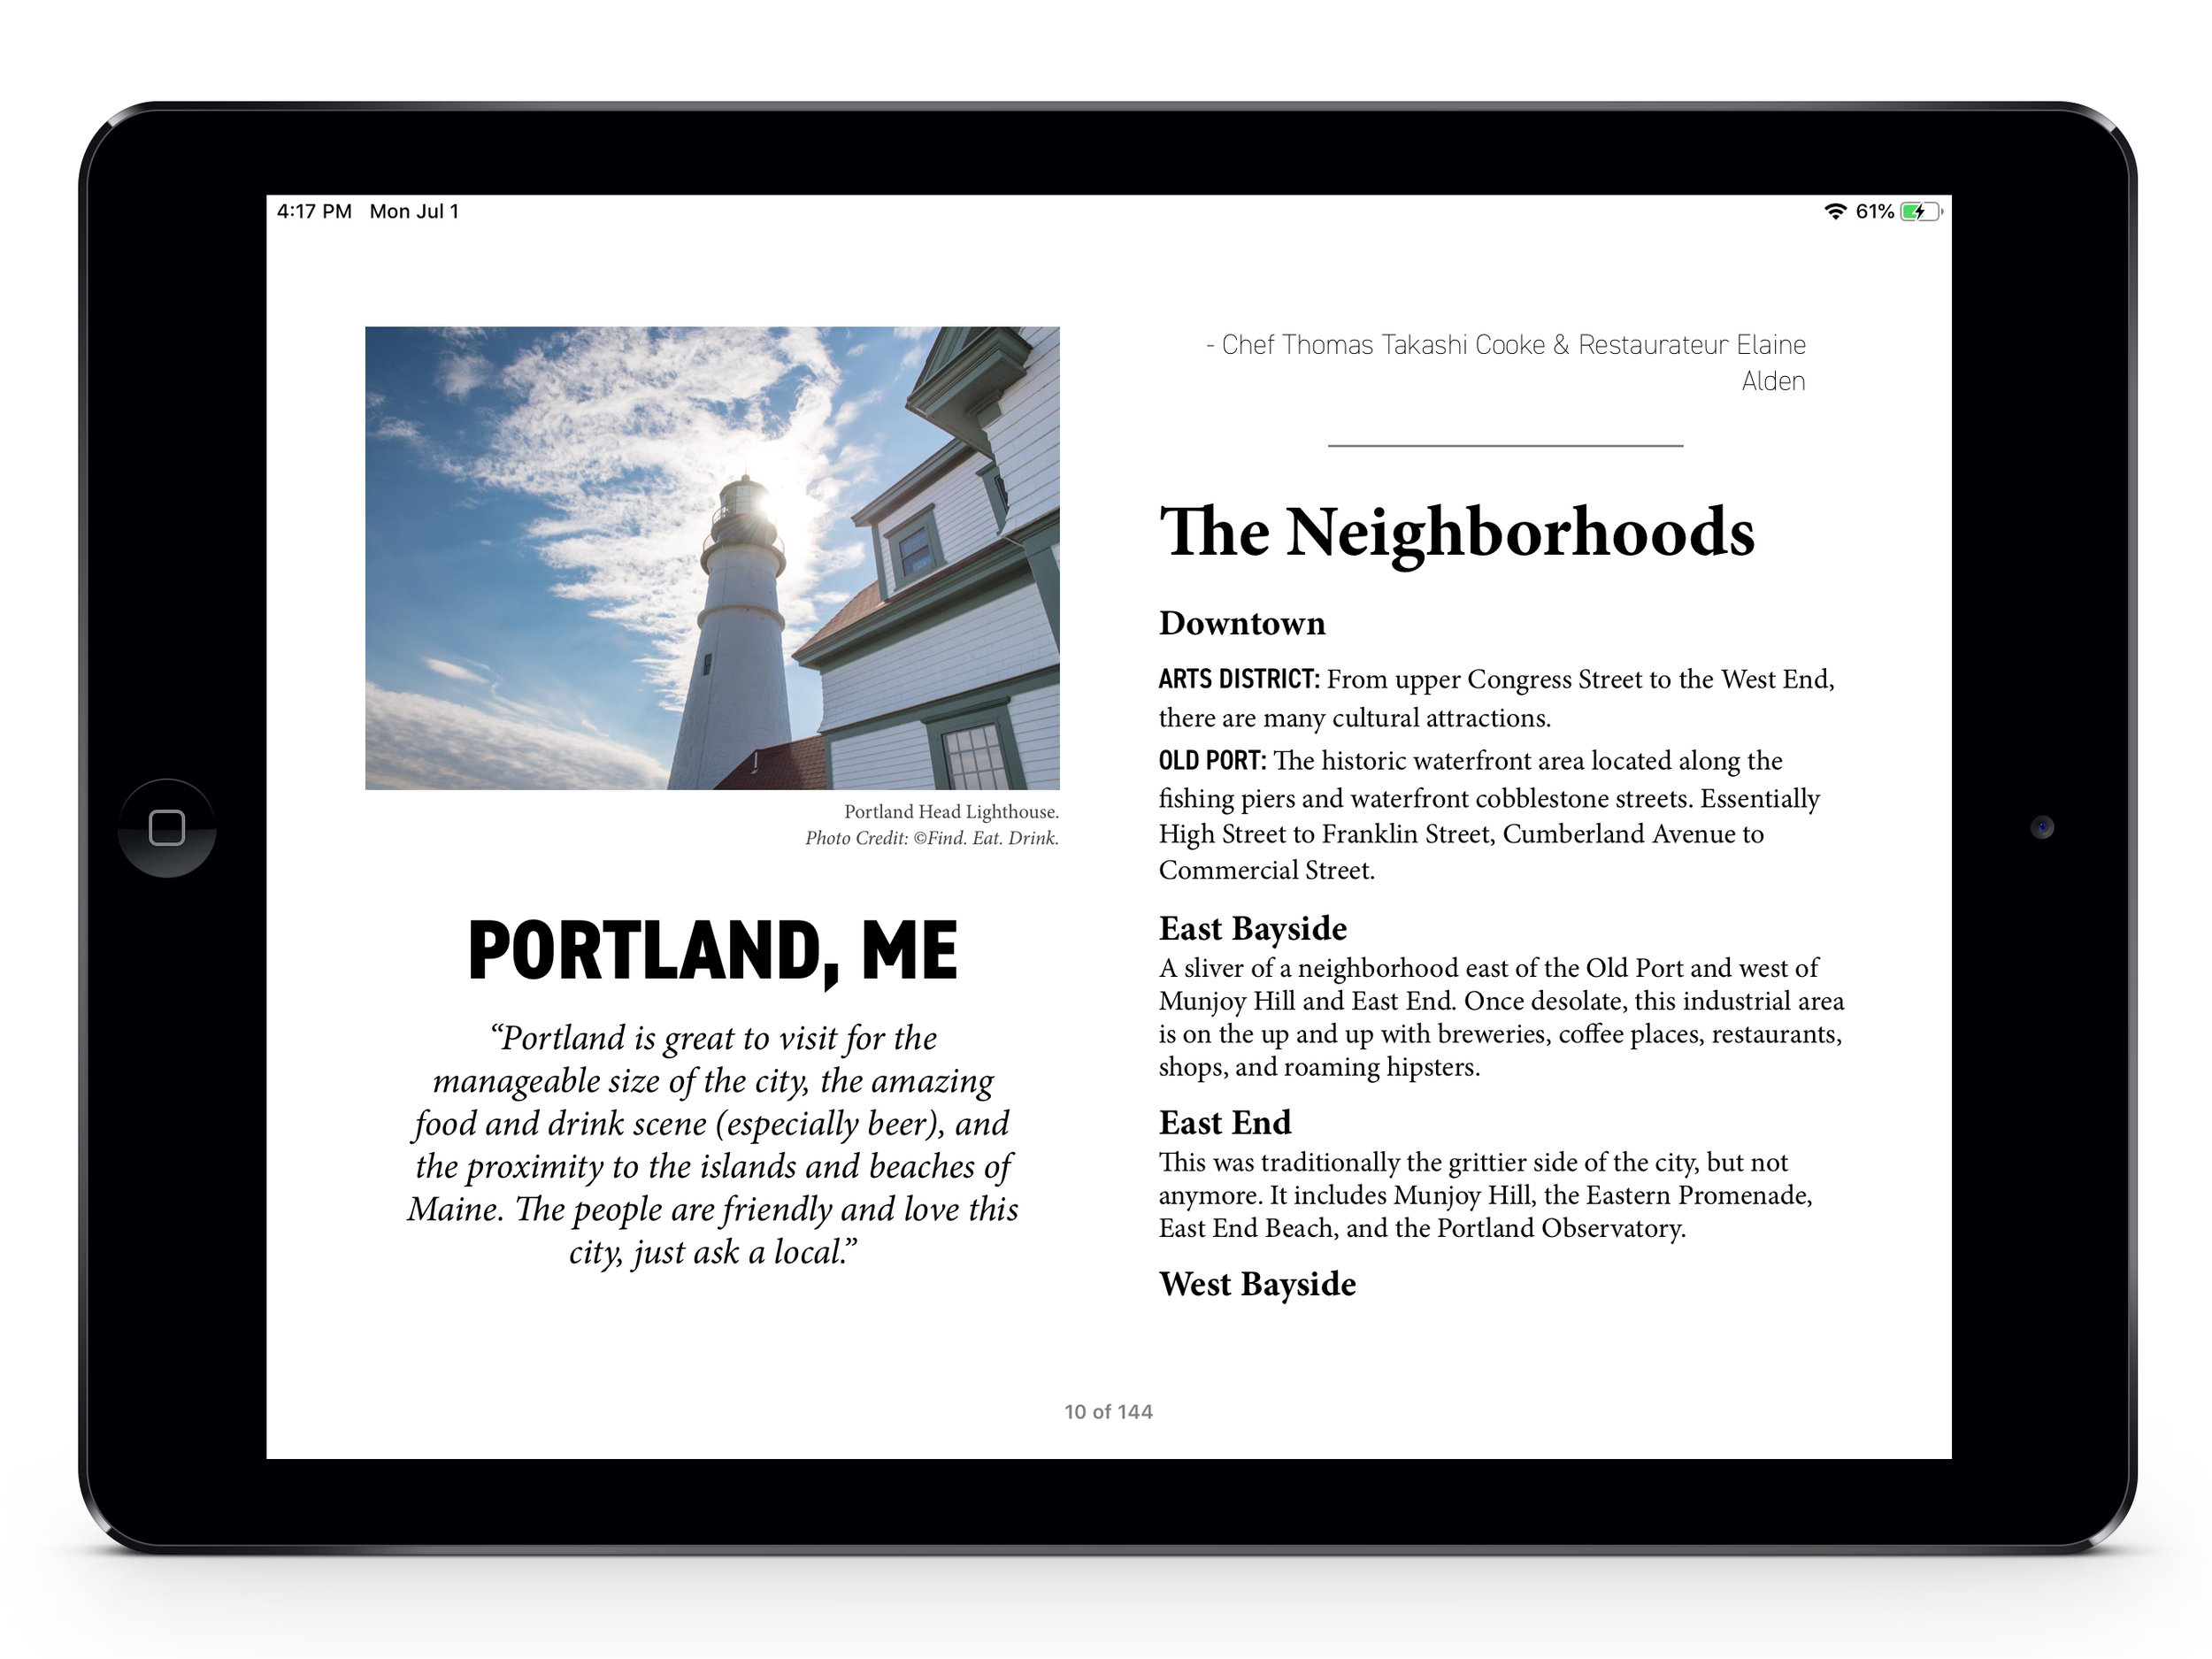 iPadAir_PortlandME_Screenshots_Landscape_1.4.jpg